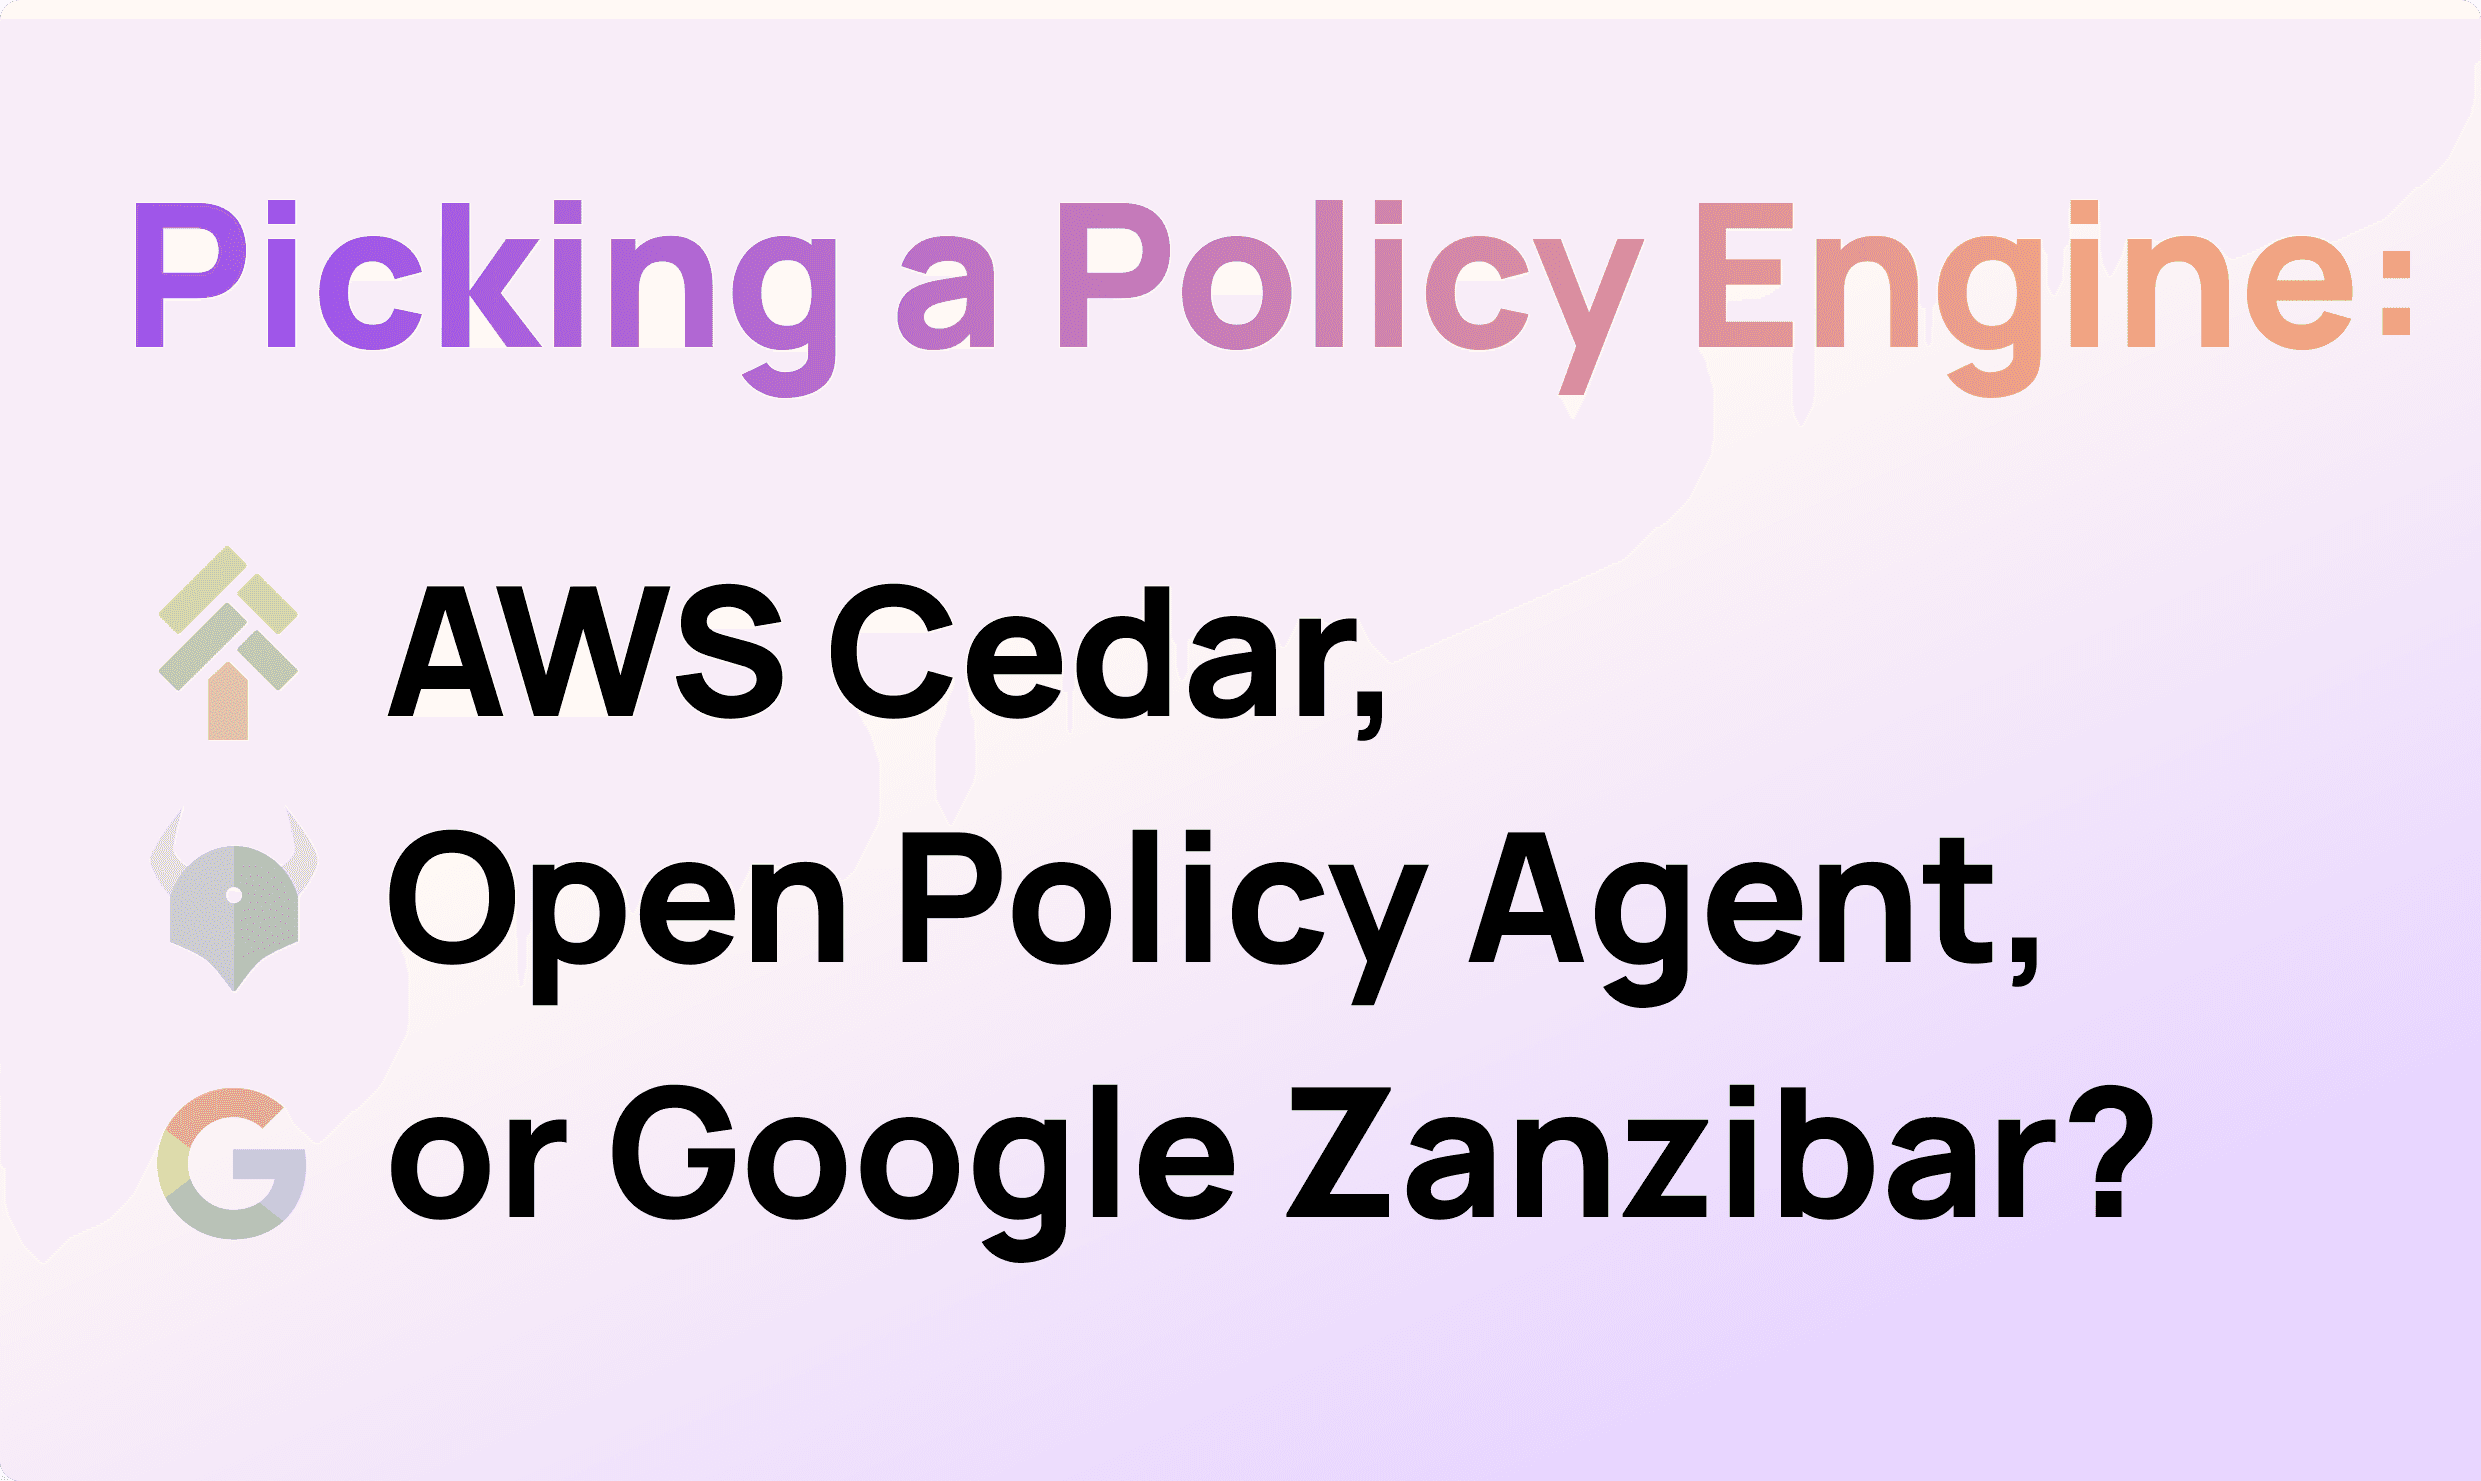 Policy Engines: Open Policy Agent vs AWS Cedar vs Google Zanzibar